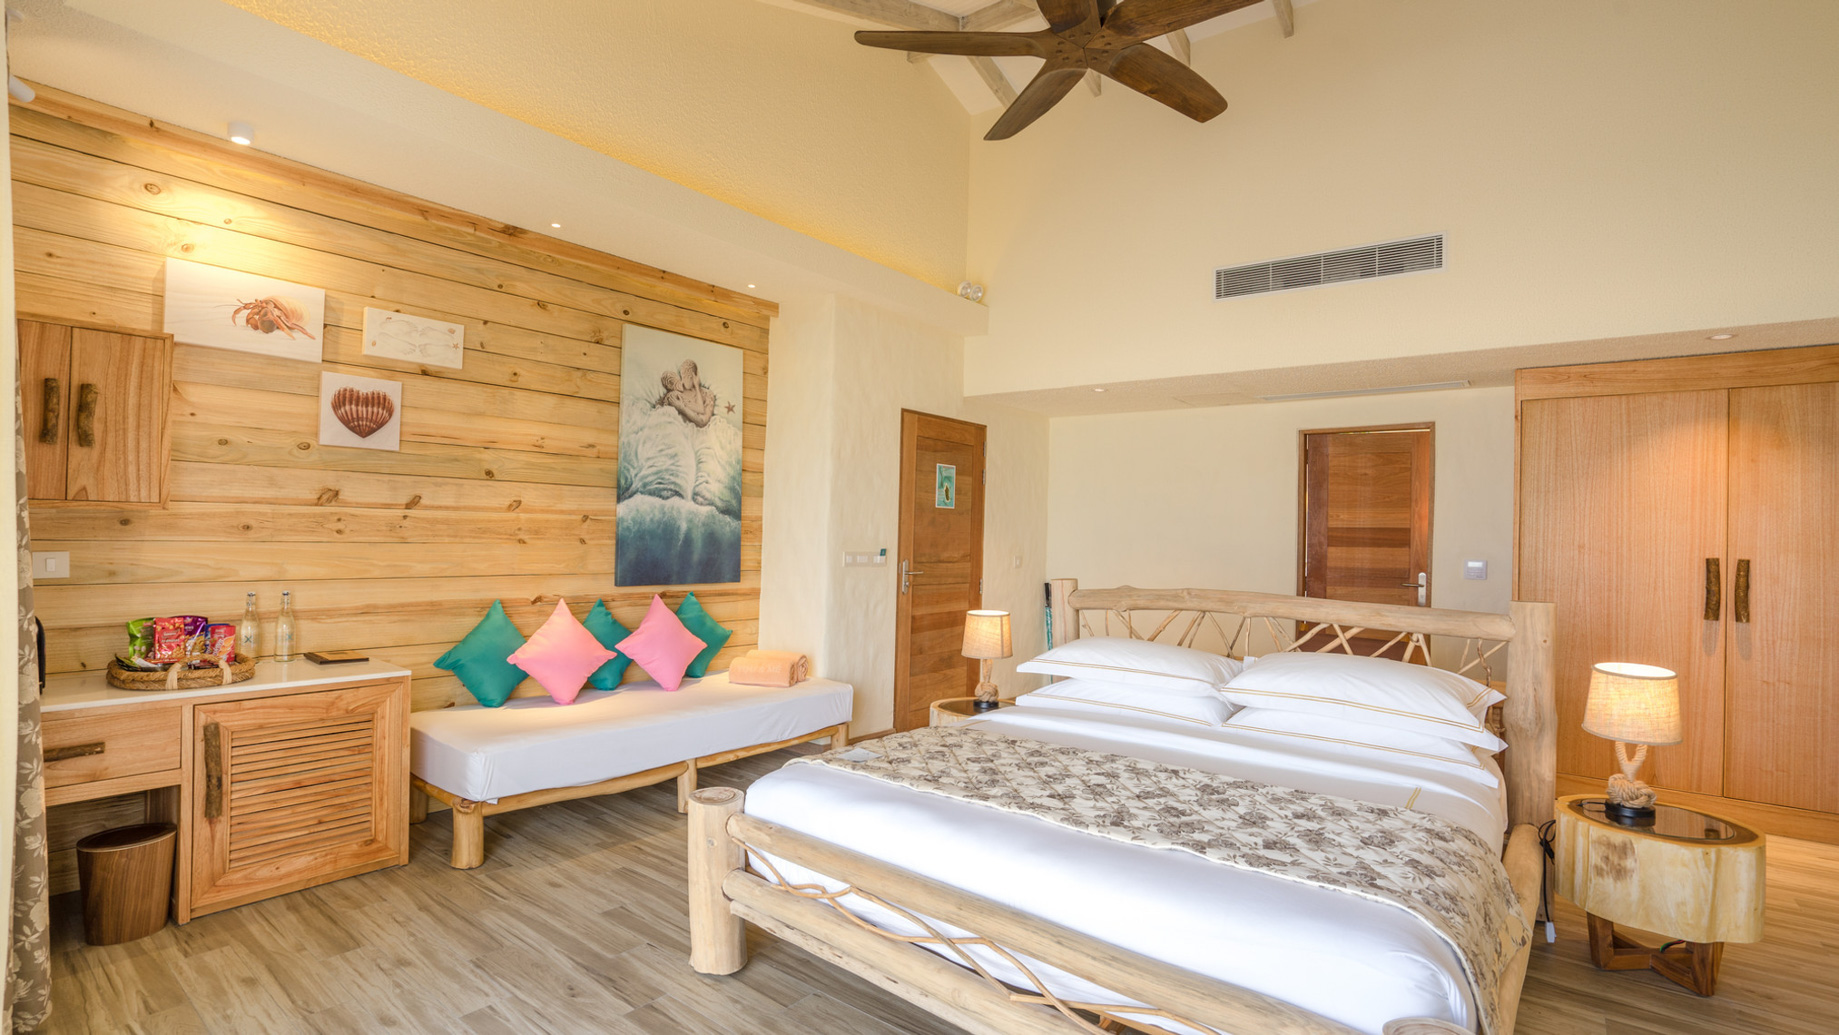 You & Me Maldives Resort - Uthurumaafaru, Raa Atoll, Maldives - Beach Suite with Pool Bedroom